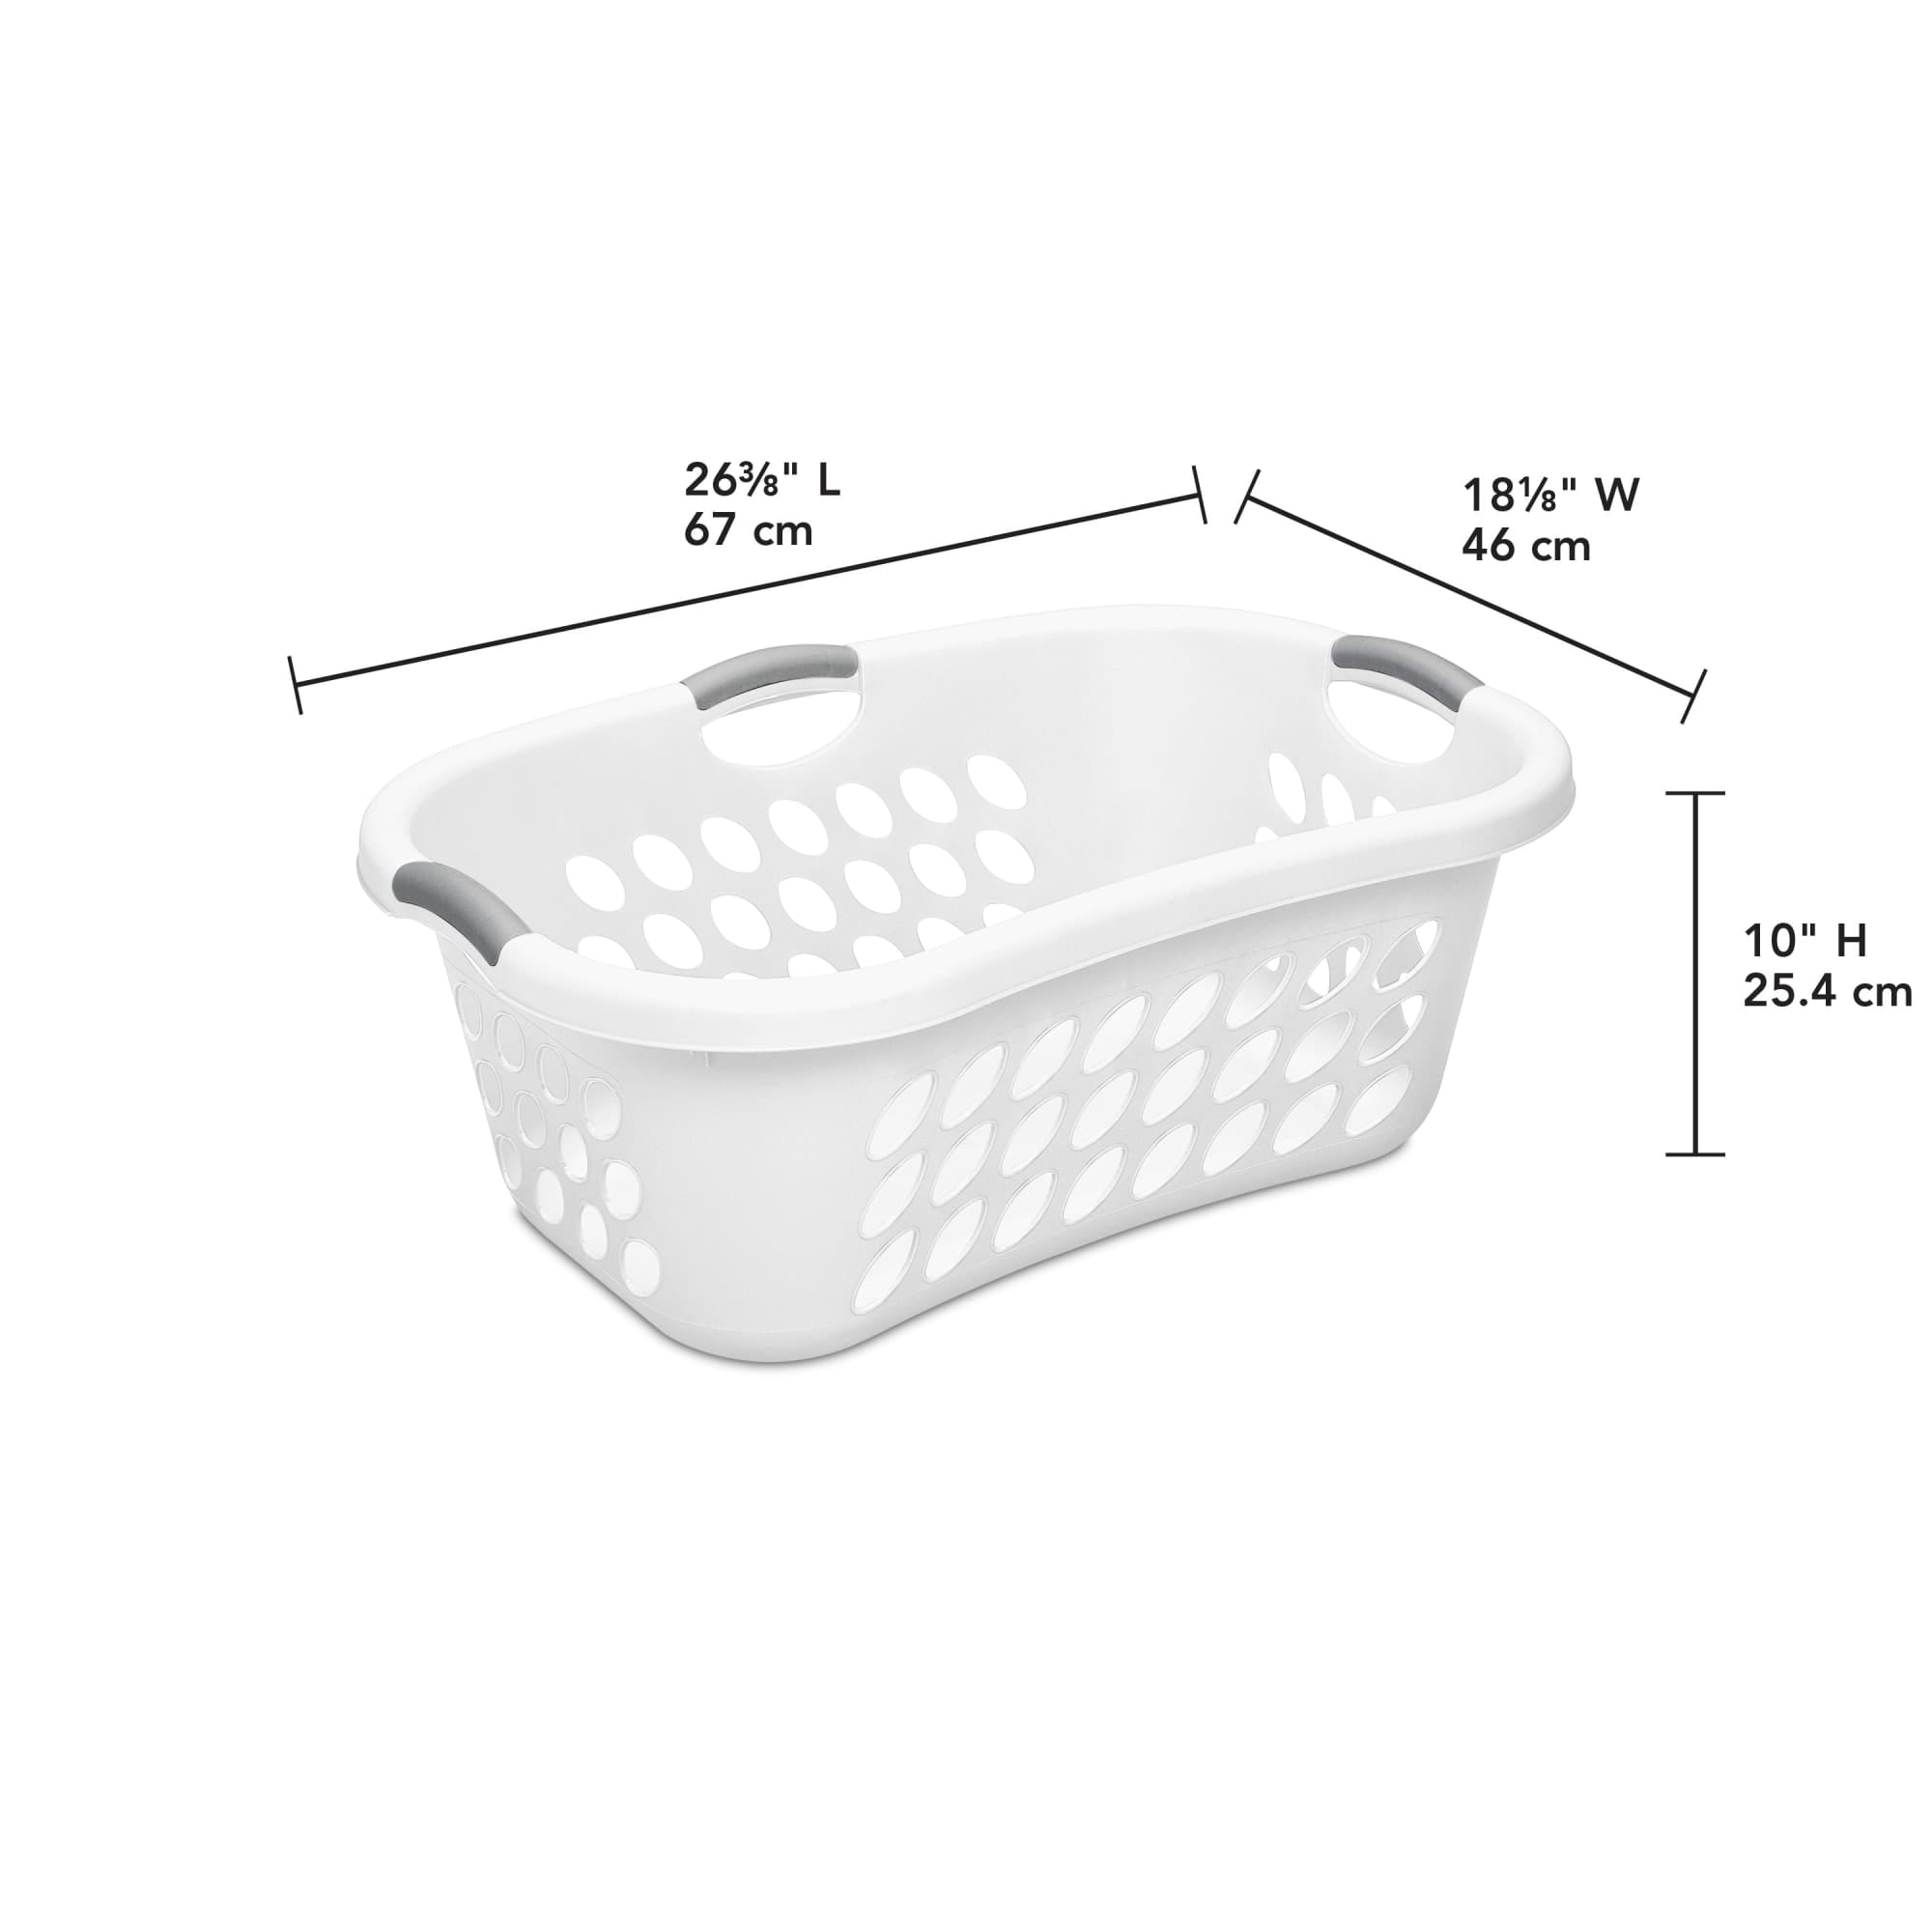 Sterilite 1.25 Bushel/ 44 Liter Ultra™ HipHold Laundry Basket $10.00 EACH, CASE PACK OF 6